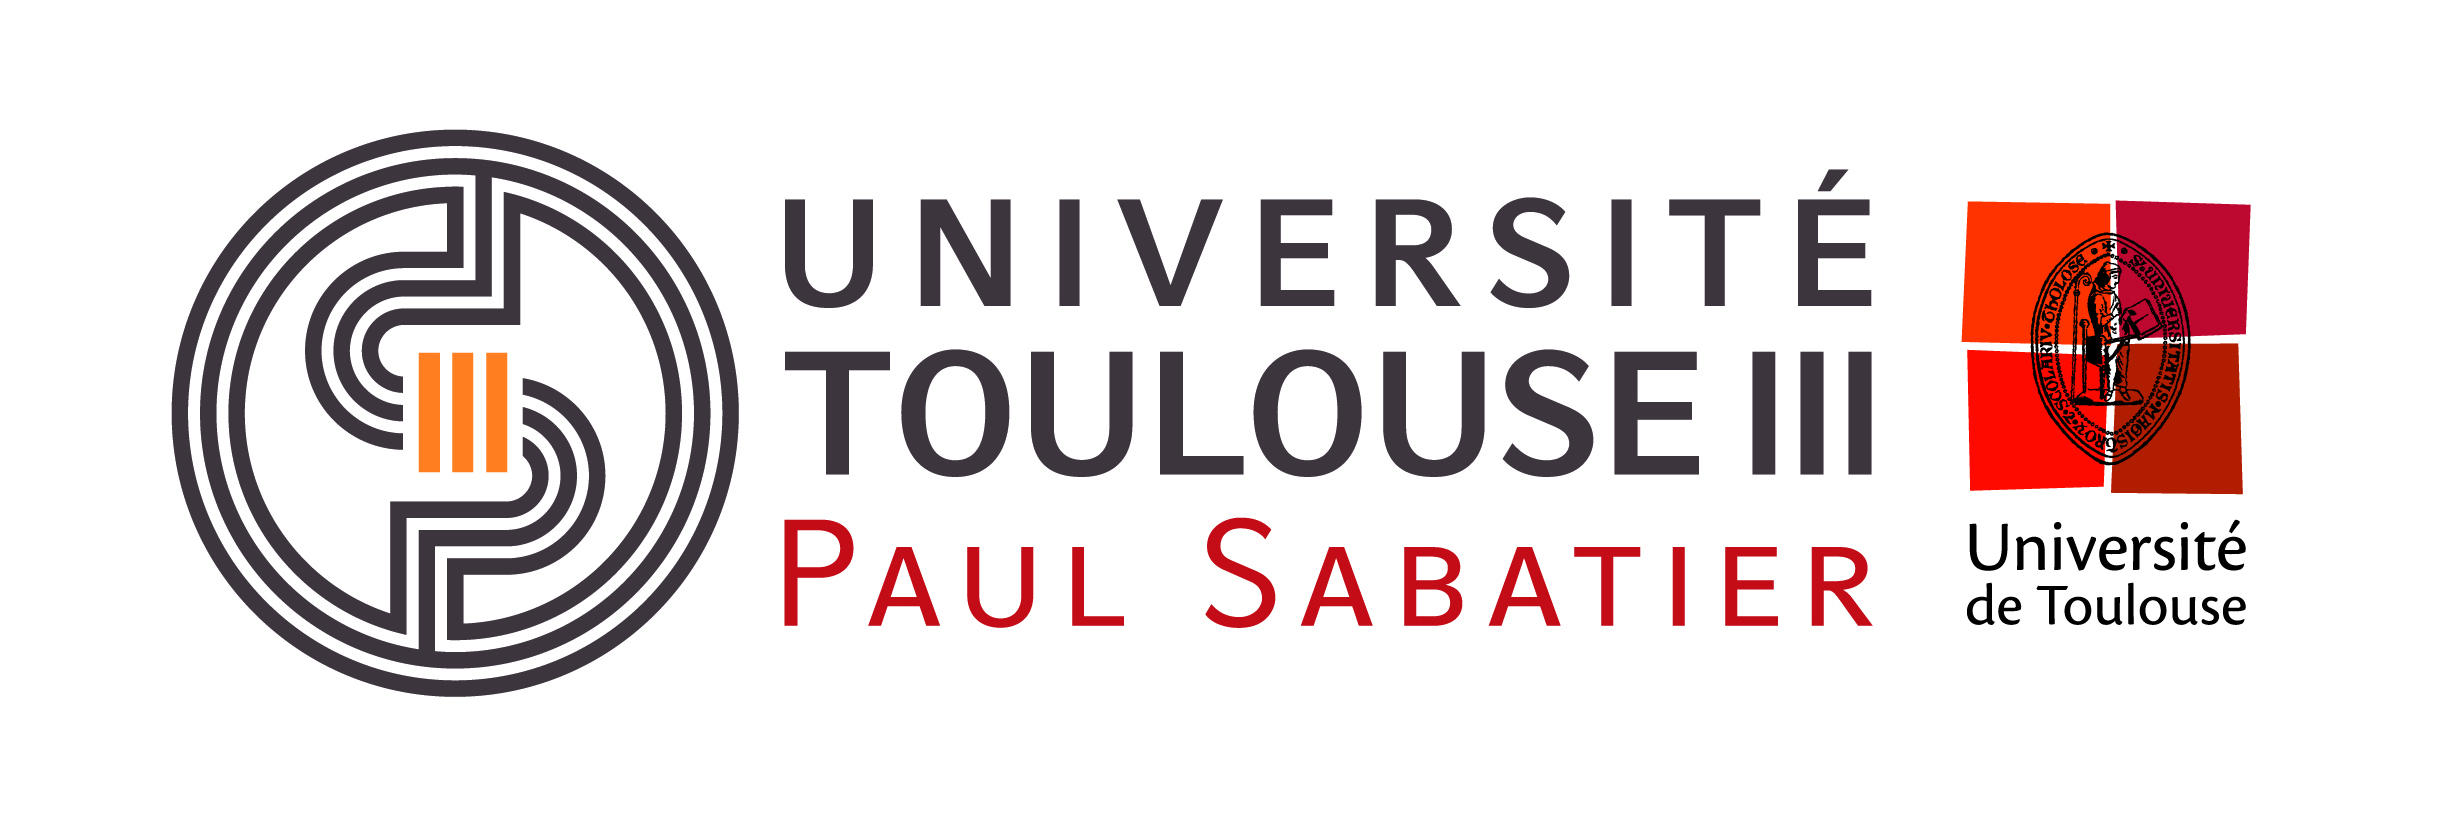 Université Toulouse III